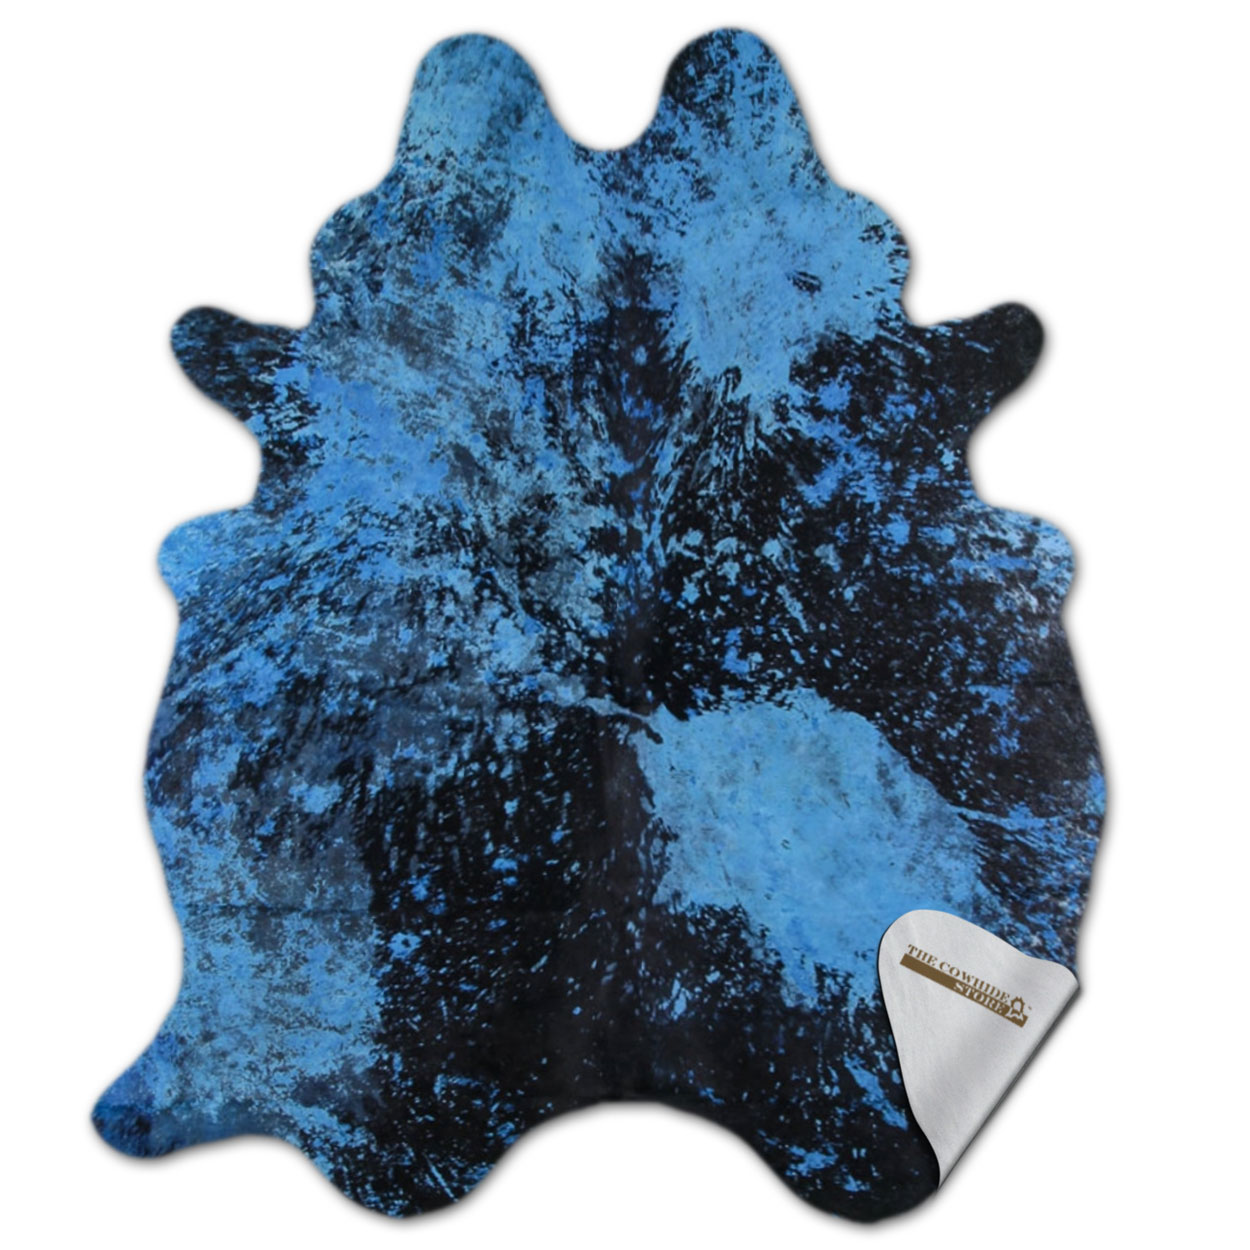 328301 - Acid Washed Distressed Blue on Black Premium Cowhide